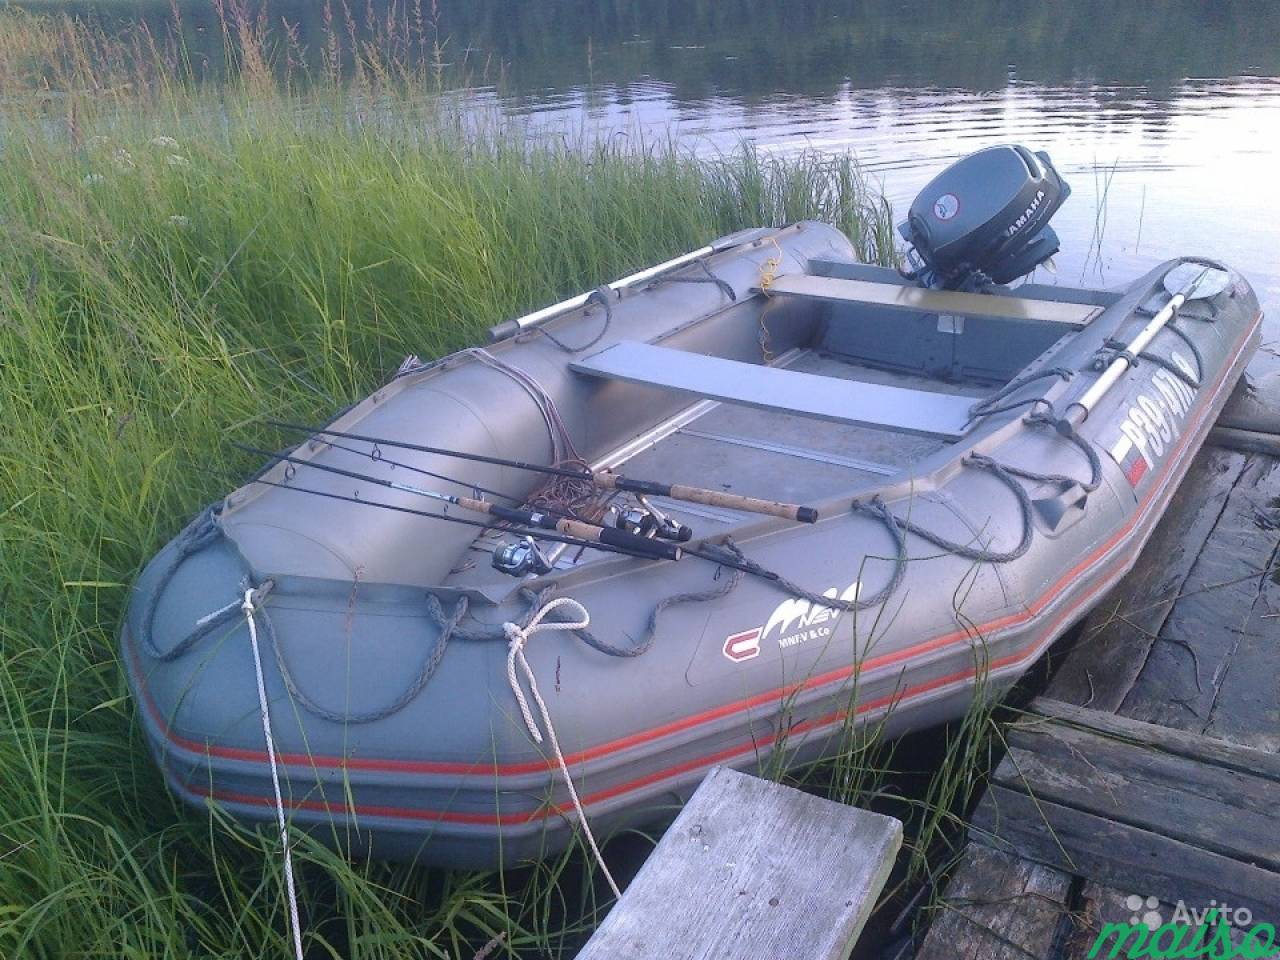 Лодка Мнев Фаворит-420, плм Yamaha-15 в Санкт-Петербурге. Фото 1